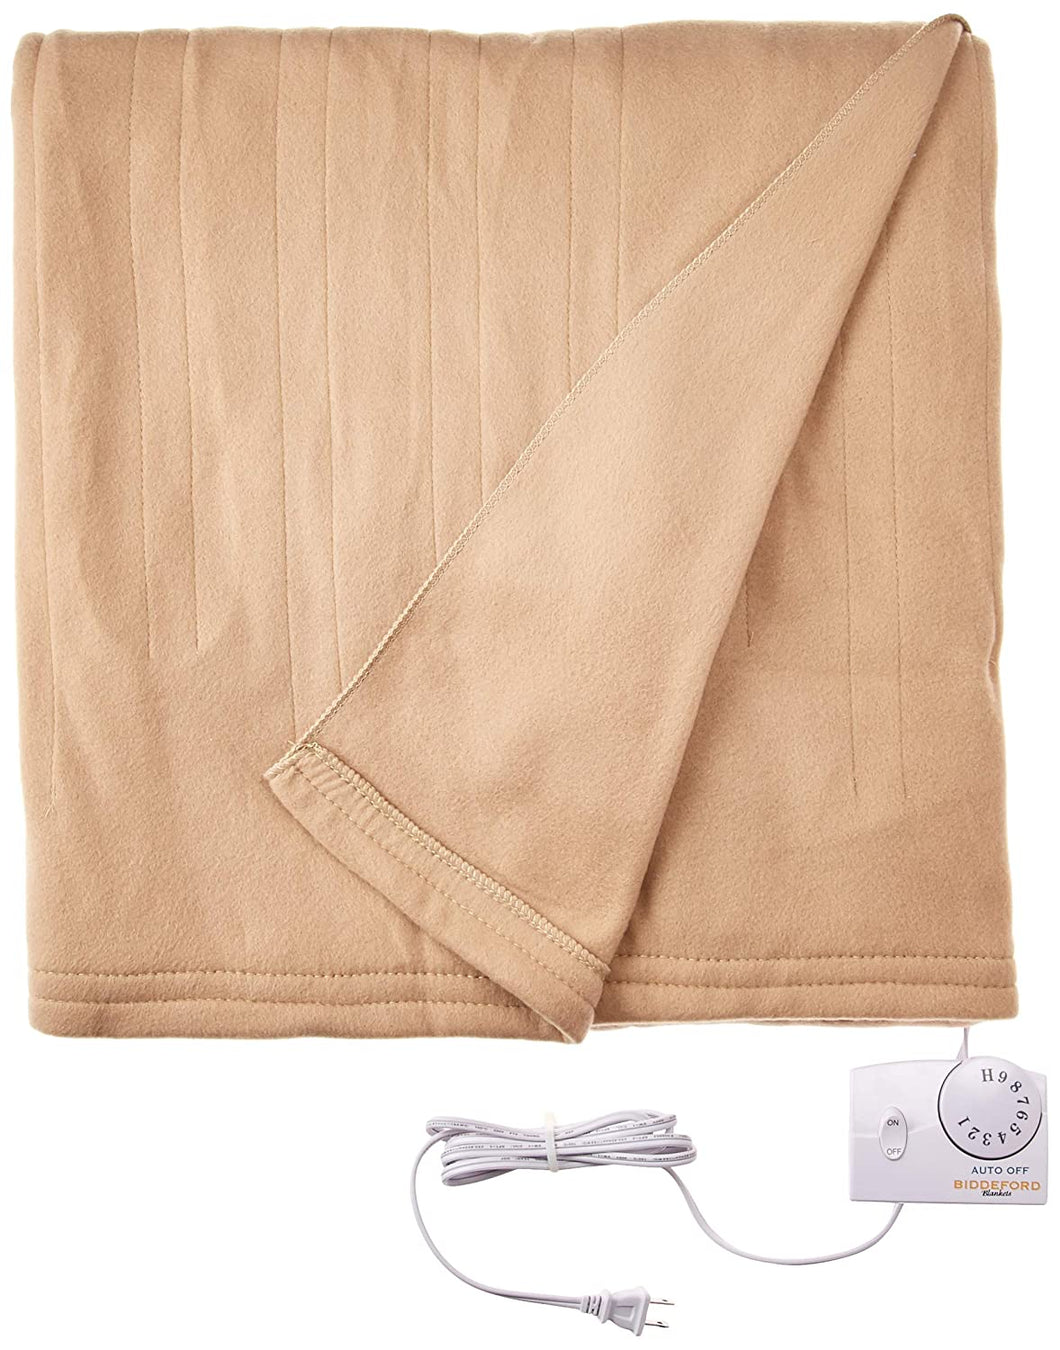 Biddeford 1000-903292-706 Comfort Knit Electric Heated Blanket, Twin,Fawn